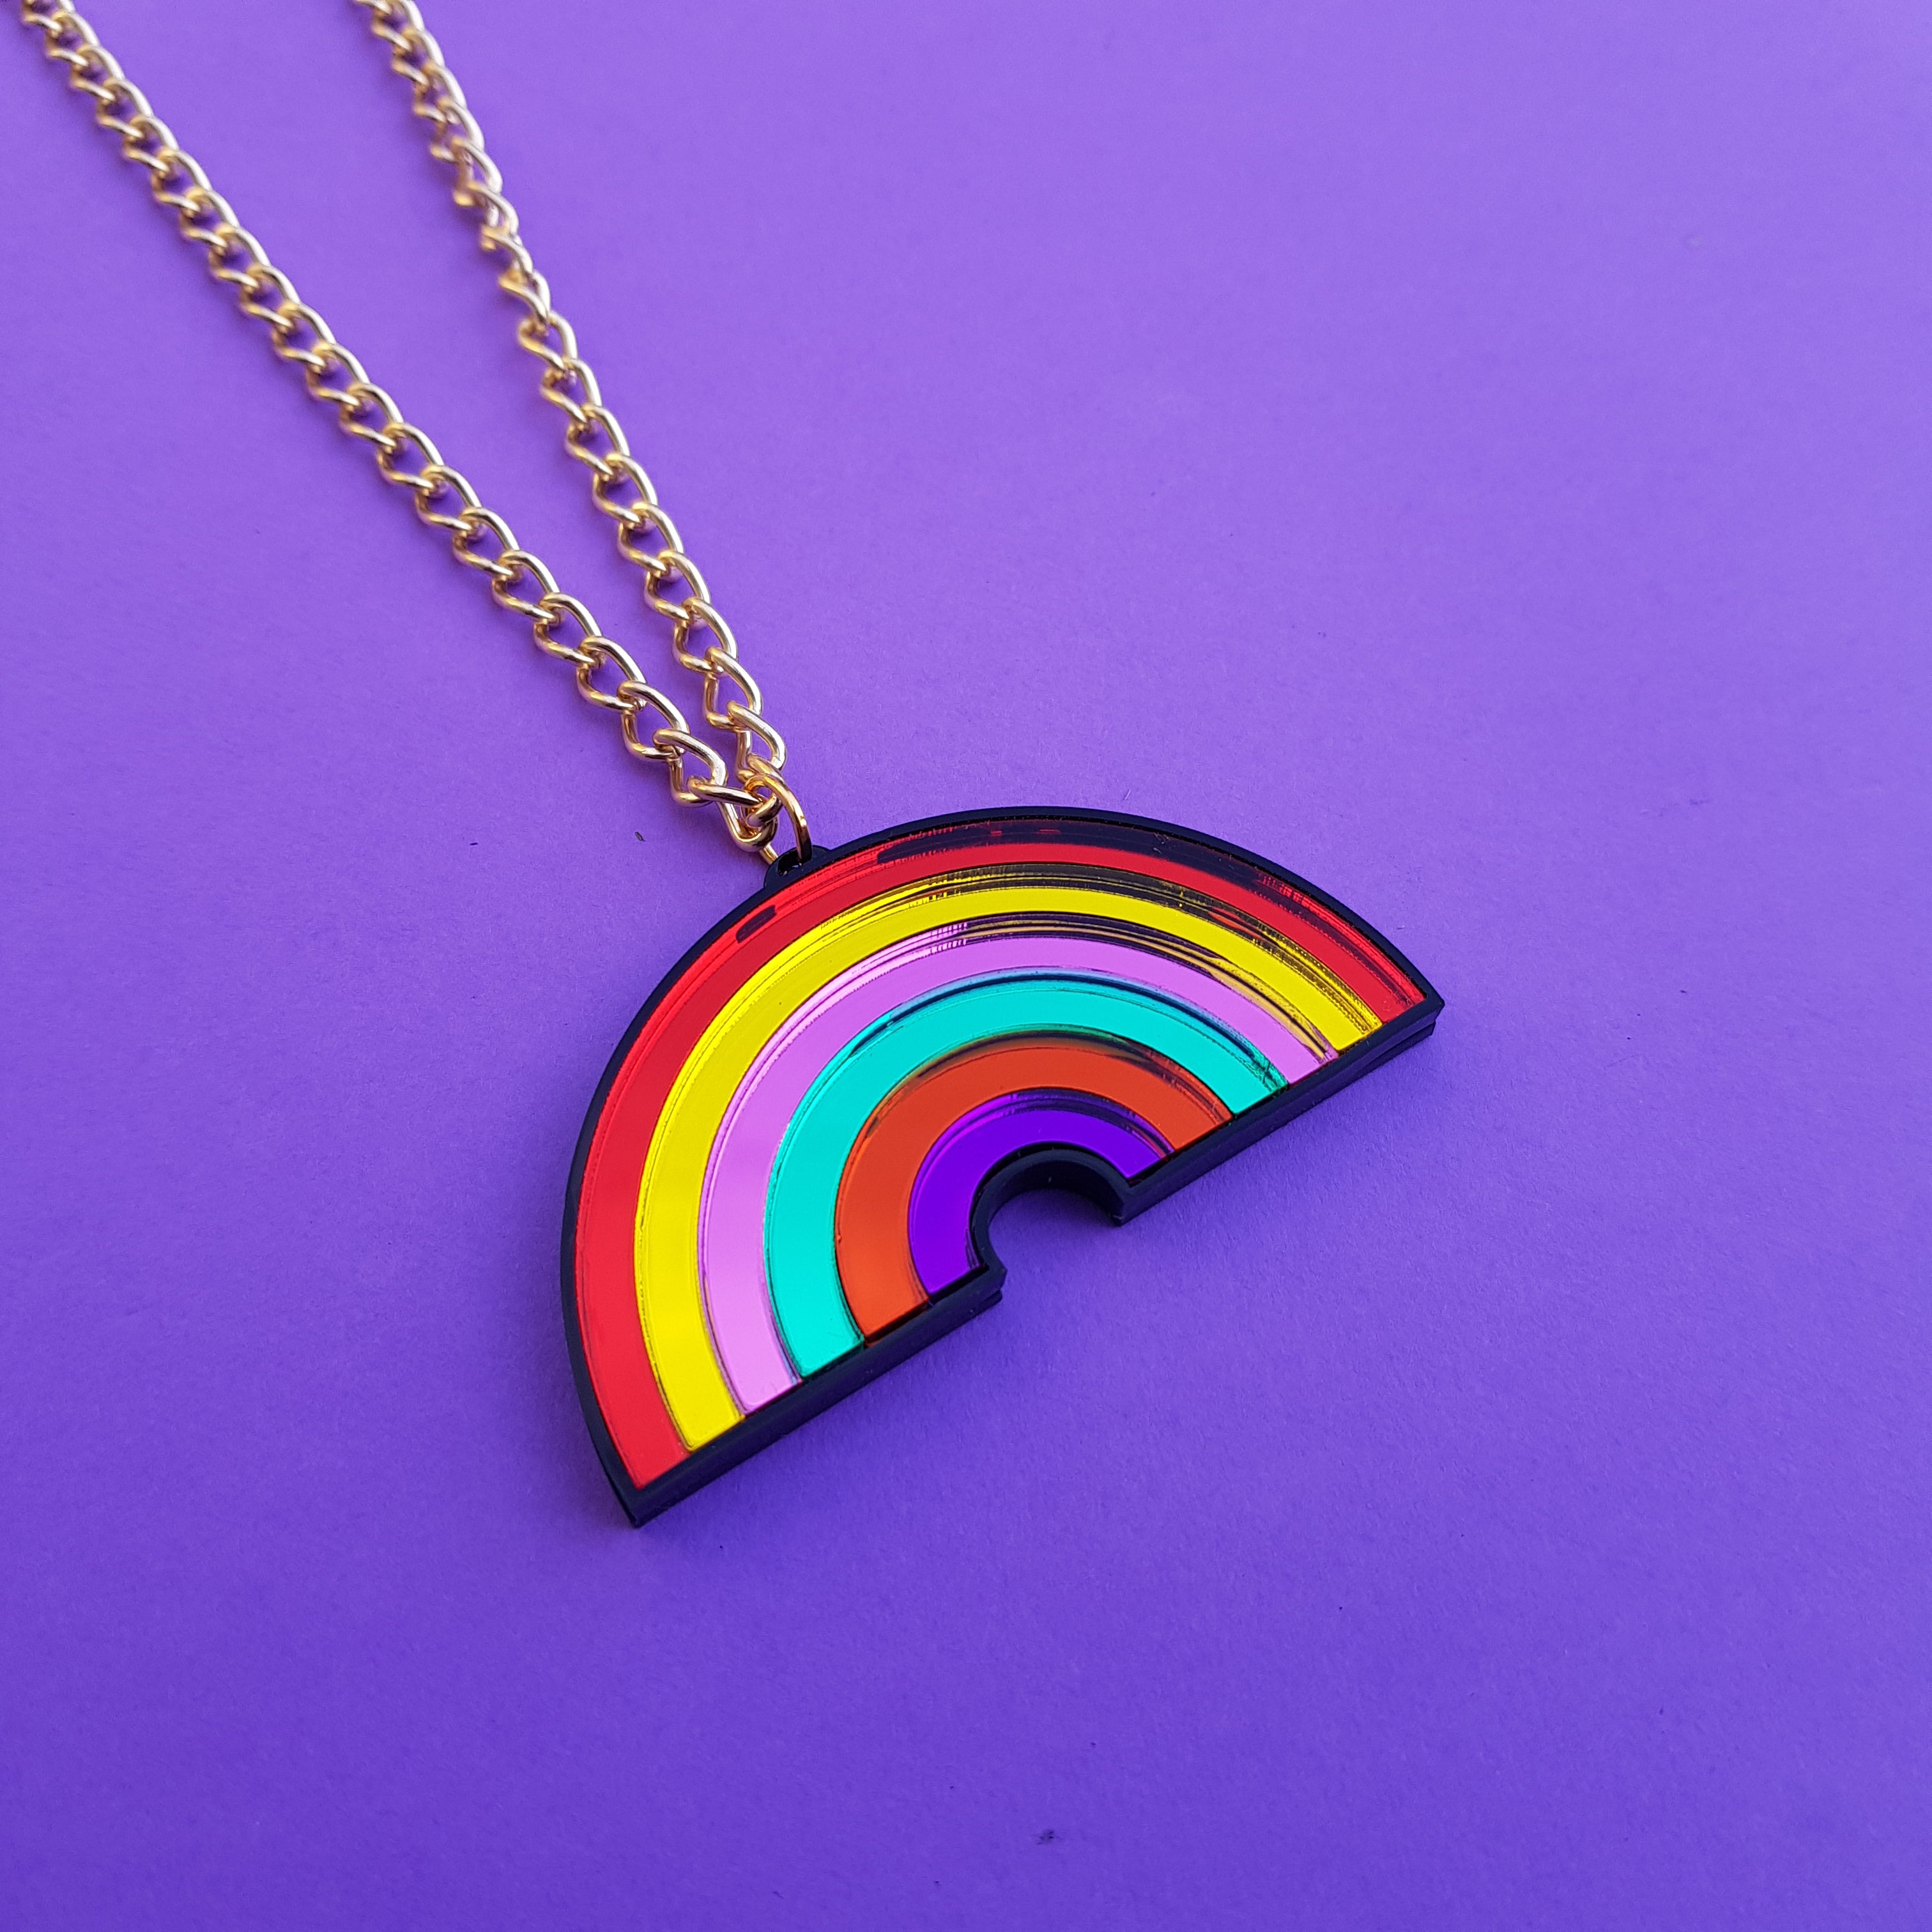 Rainbow necklace small